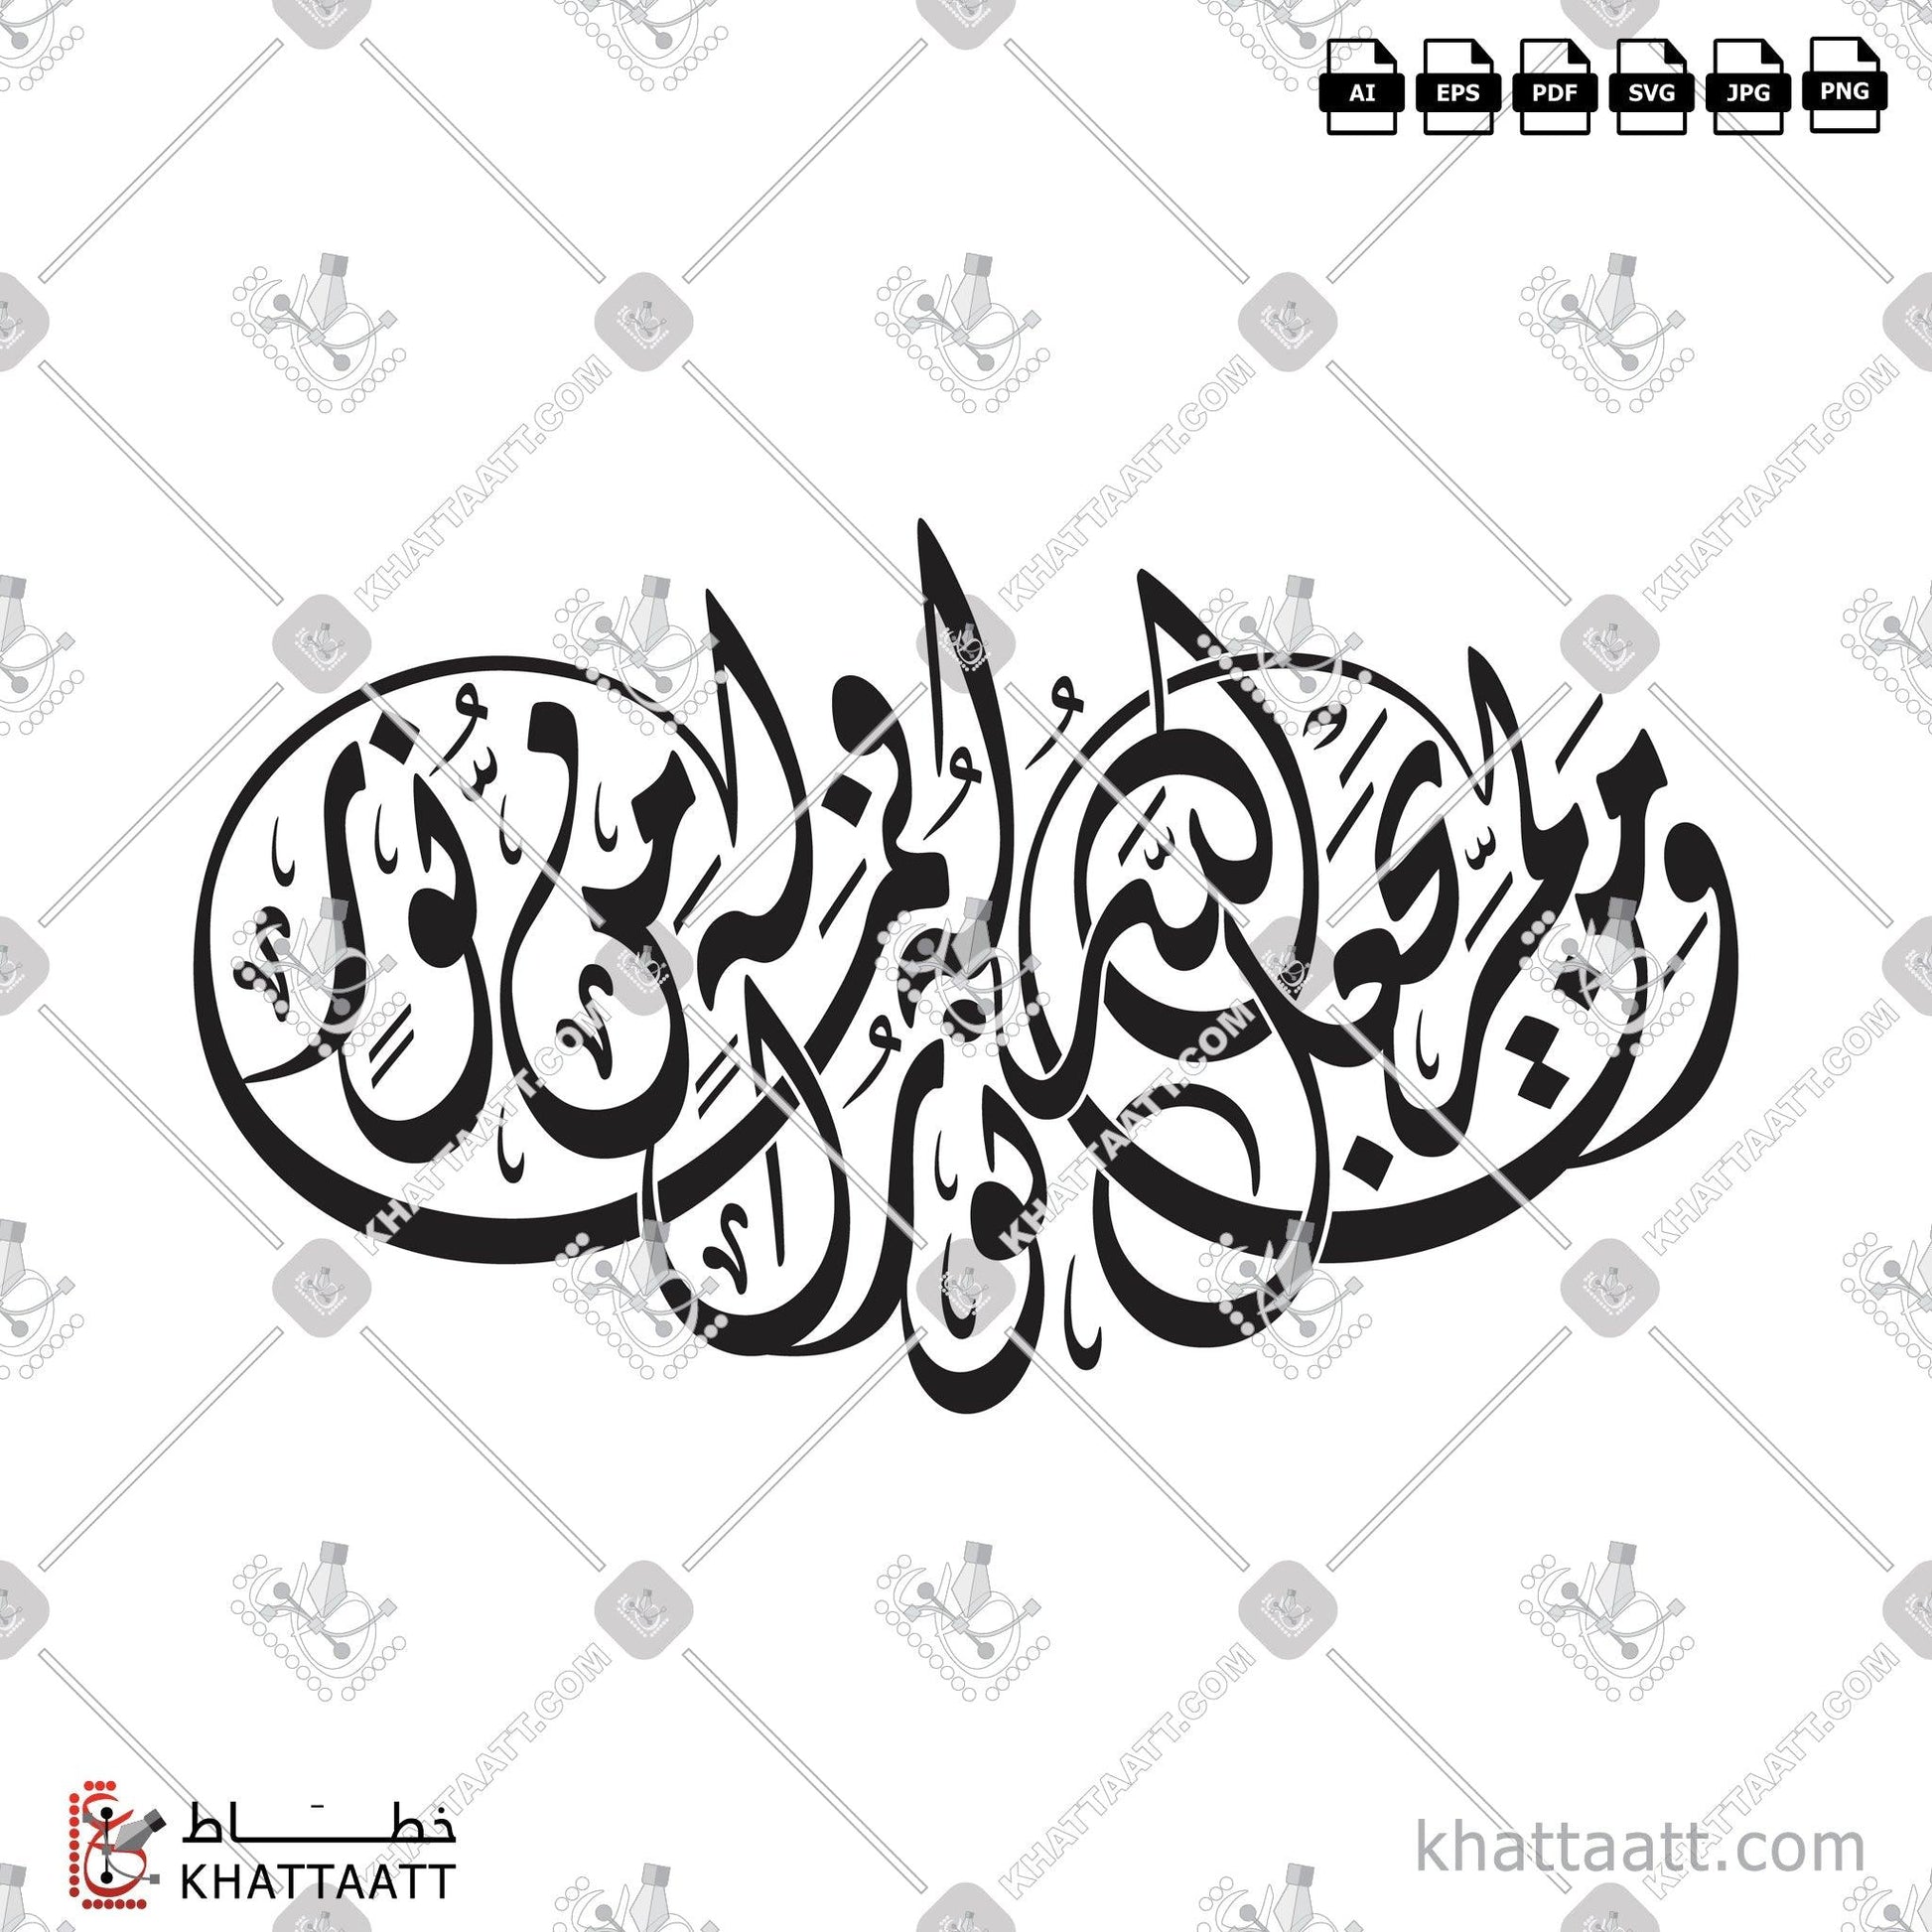 Download Arabic Calligraphy of ومن لم يجعل الله له نورا فما له من نور in Diwani - الخط الديواني in vector and .png